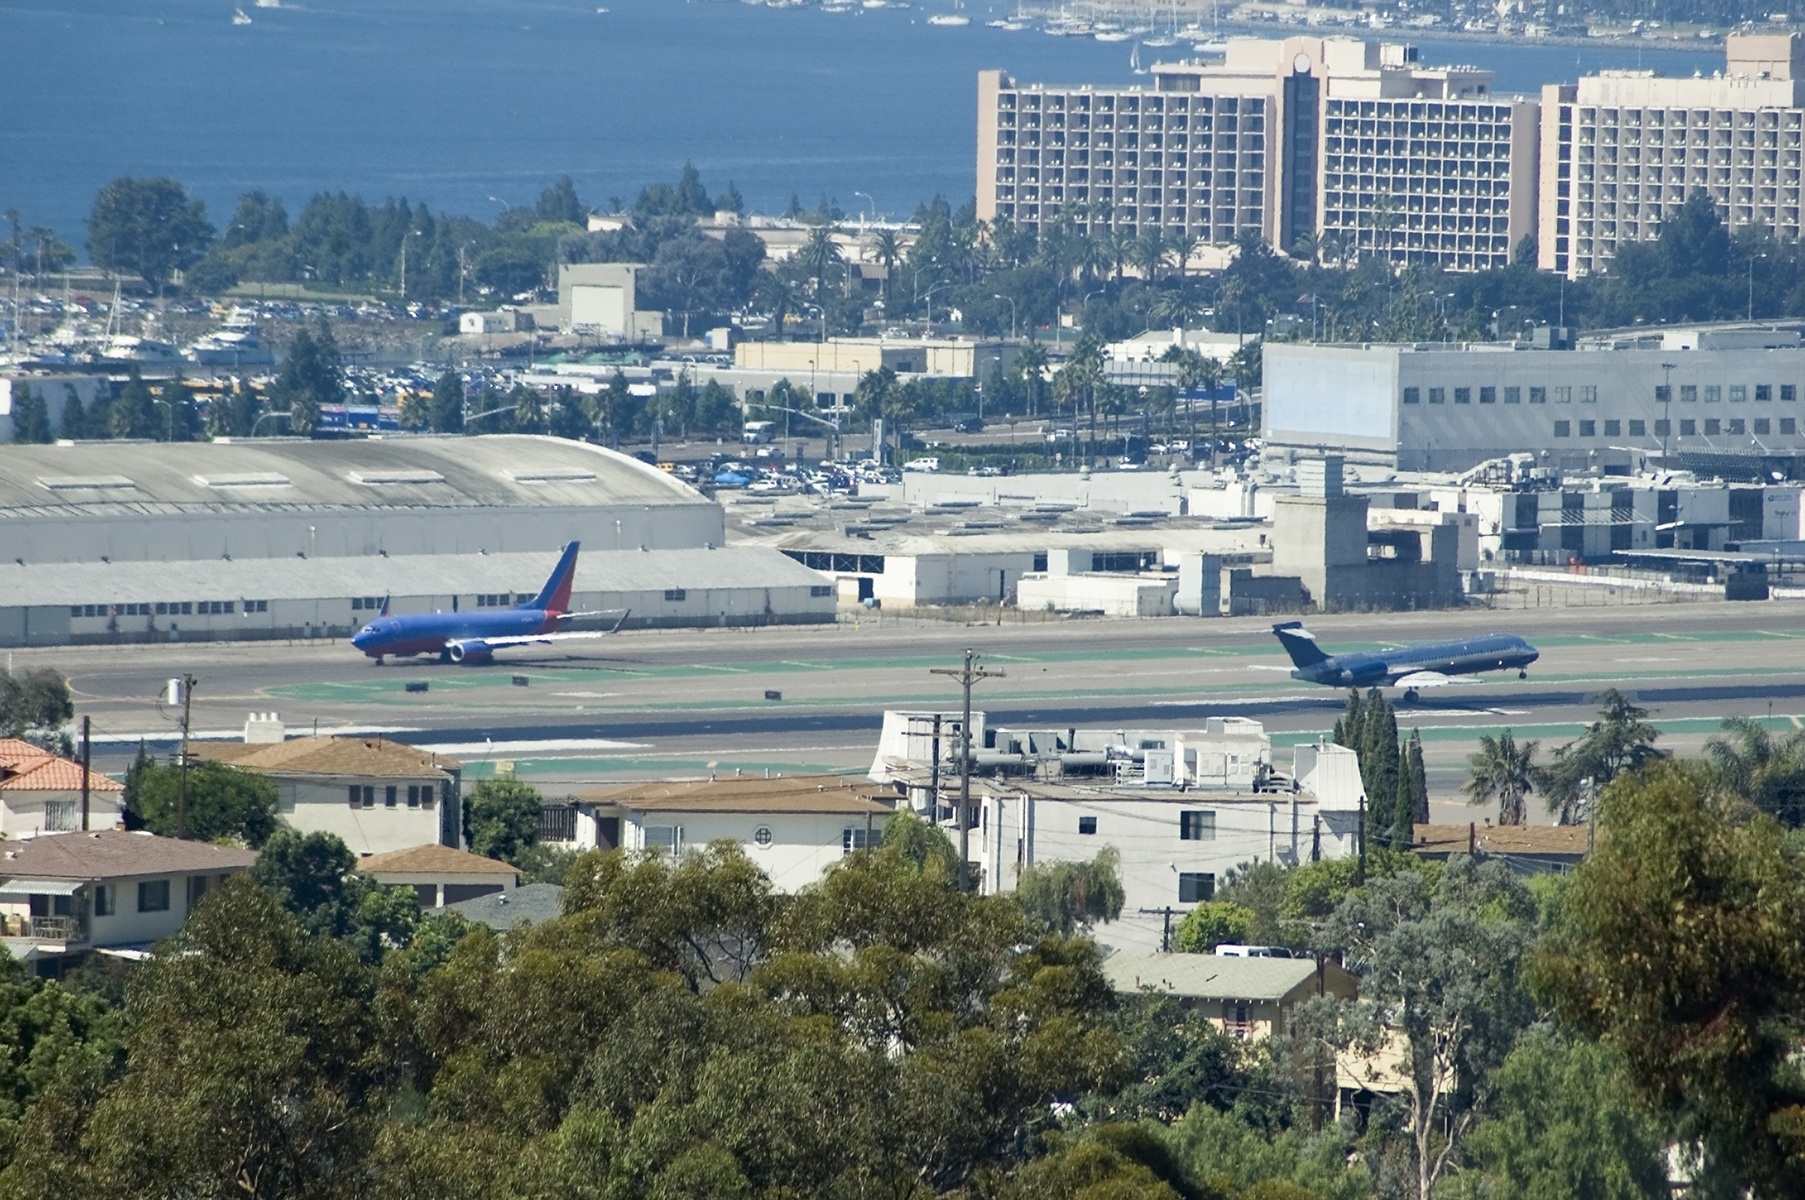 San Diego Airport plane landing